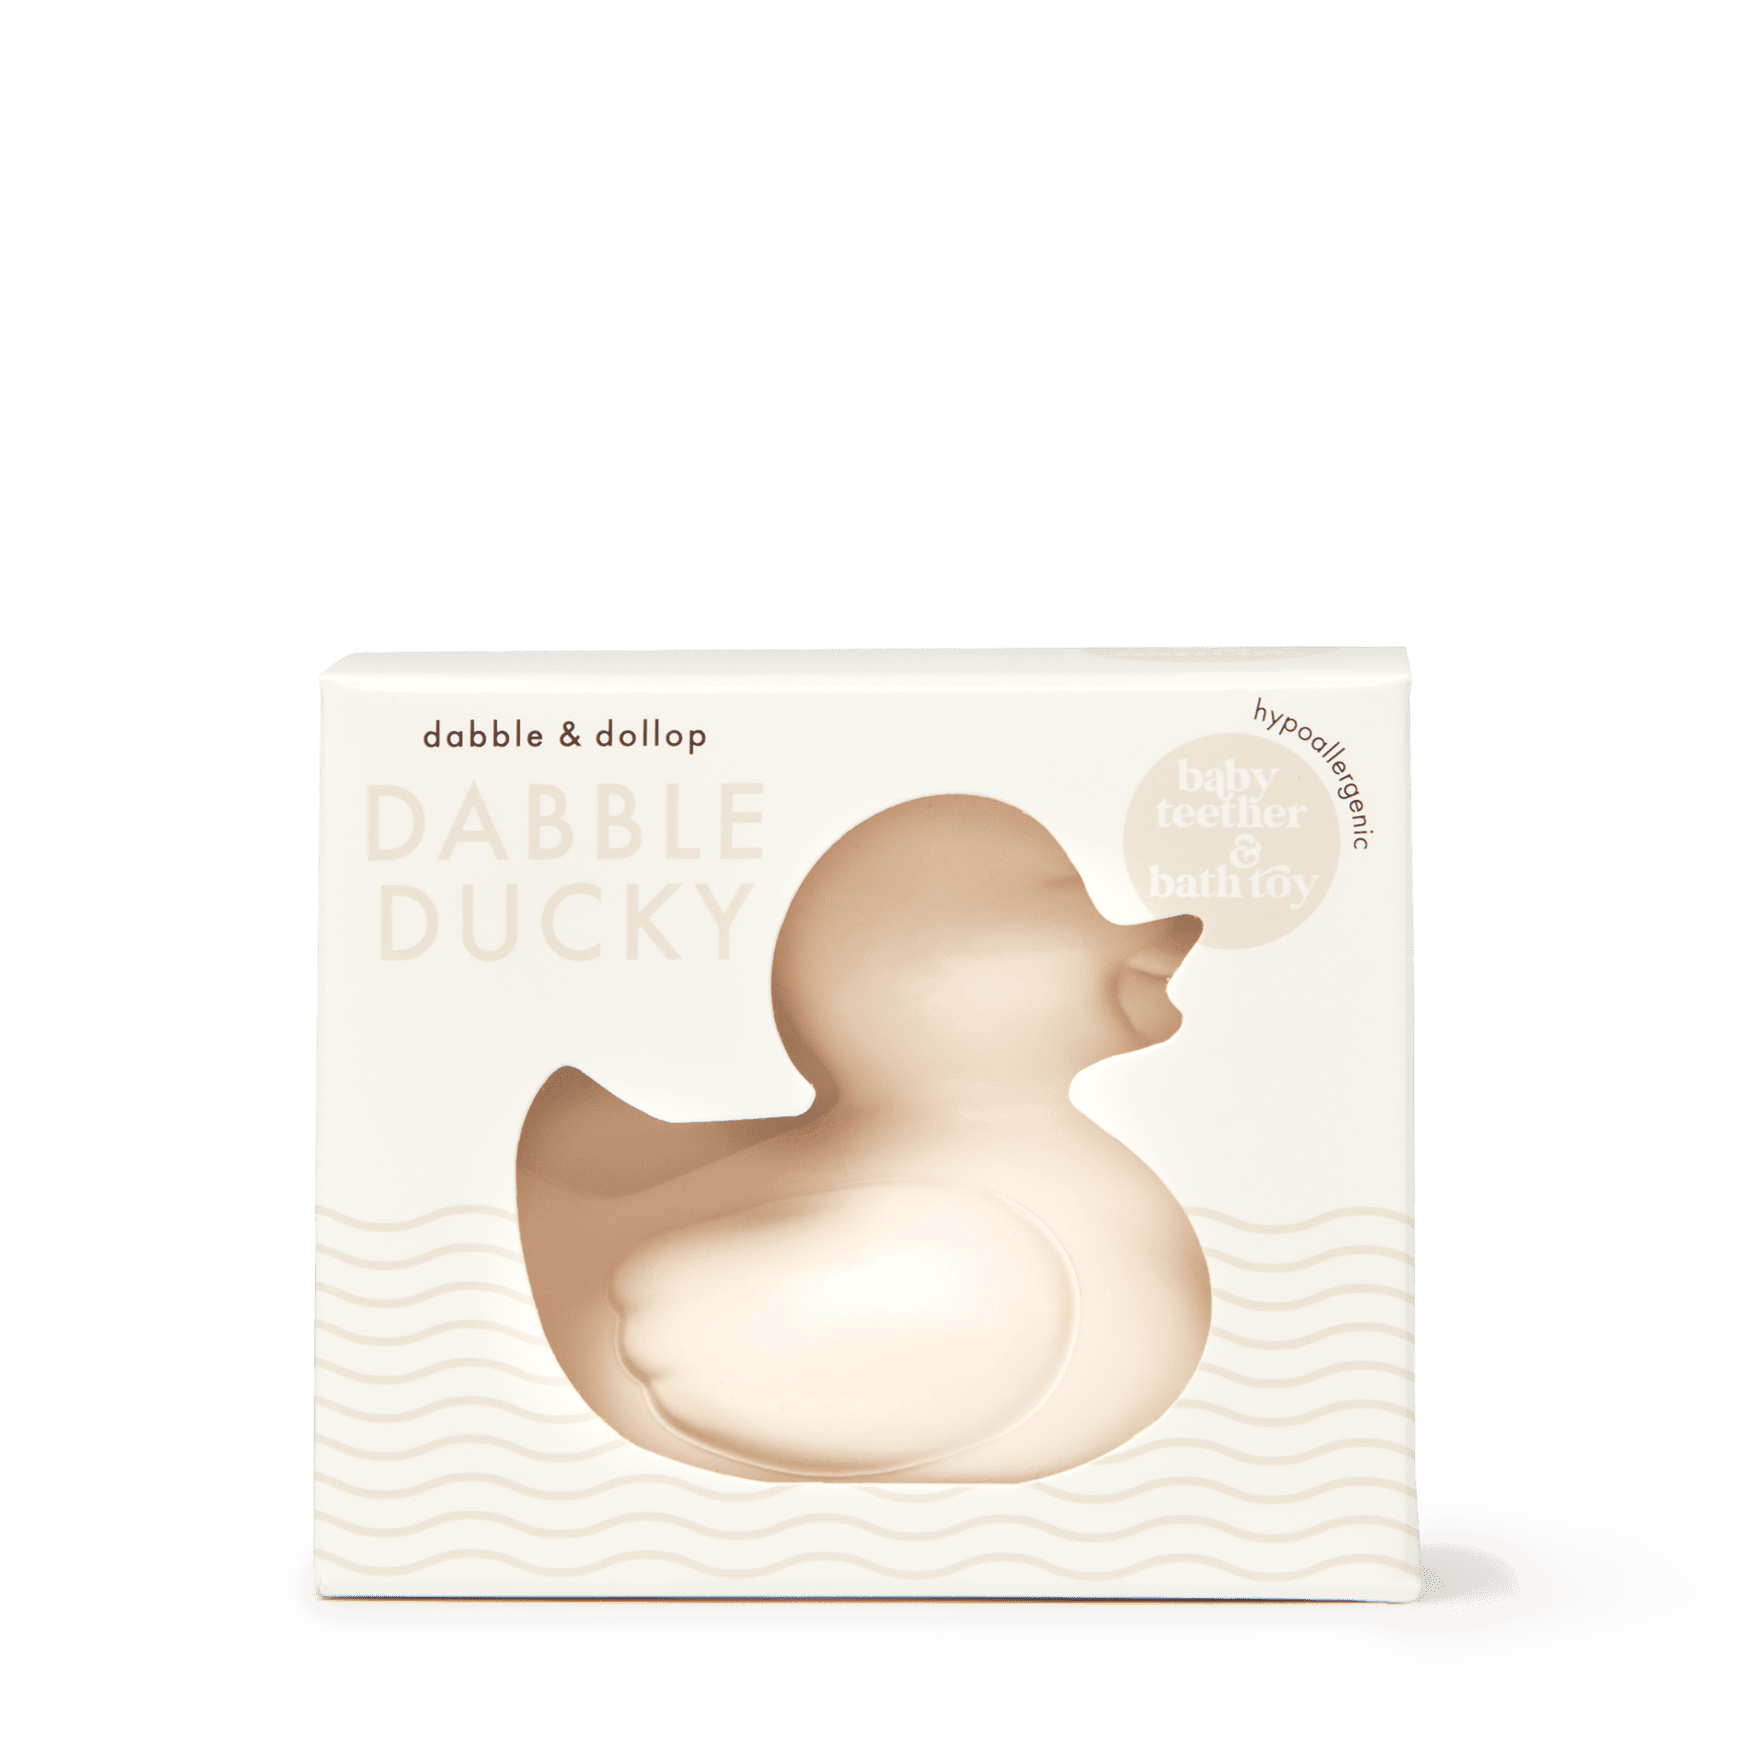 Ducky Bath Toy & Teether (Latex-Free)